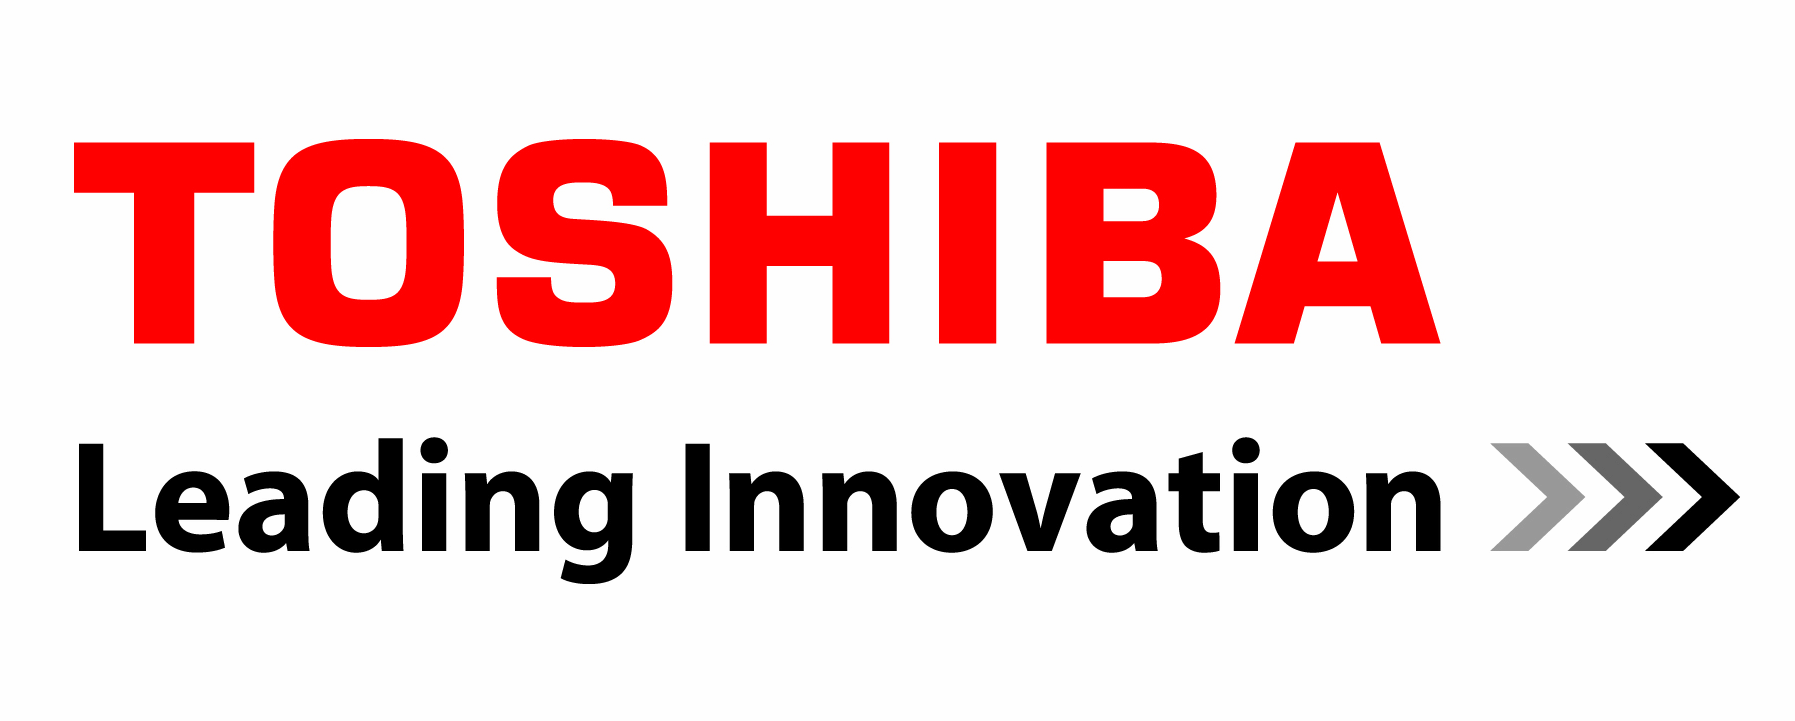 Винт TOSHIBA оригинал для Toshiba (X0-00730000)